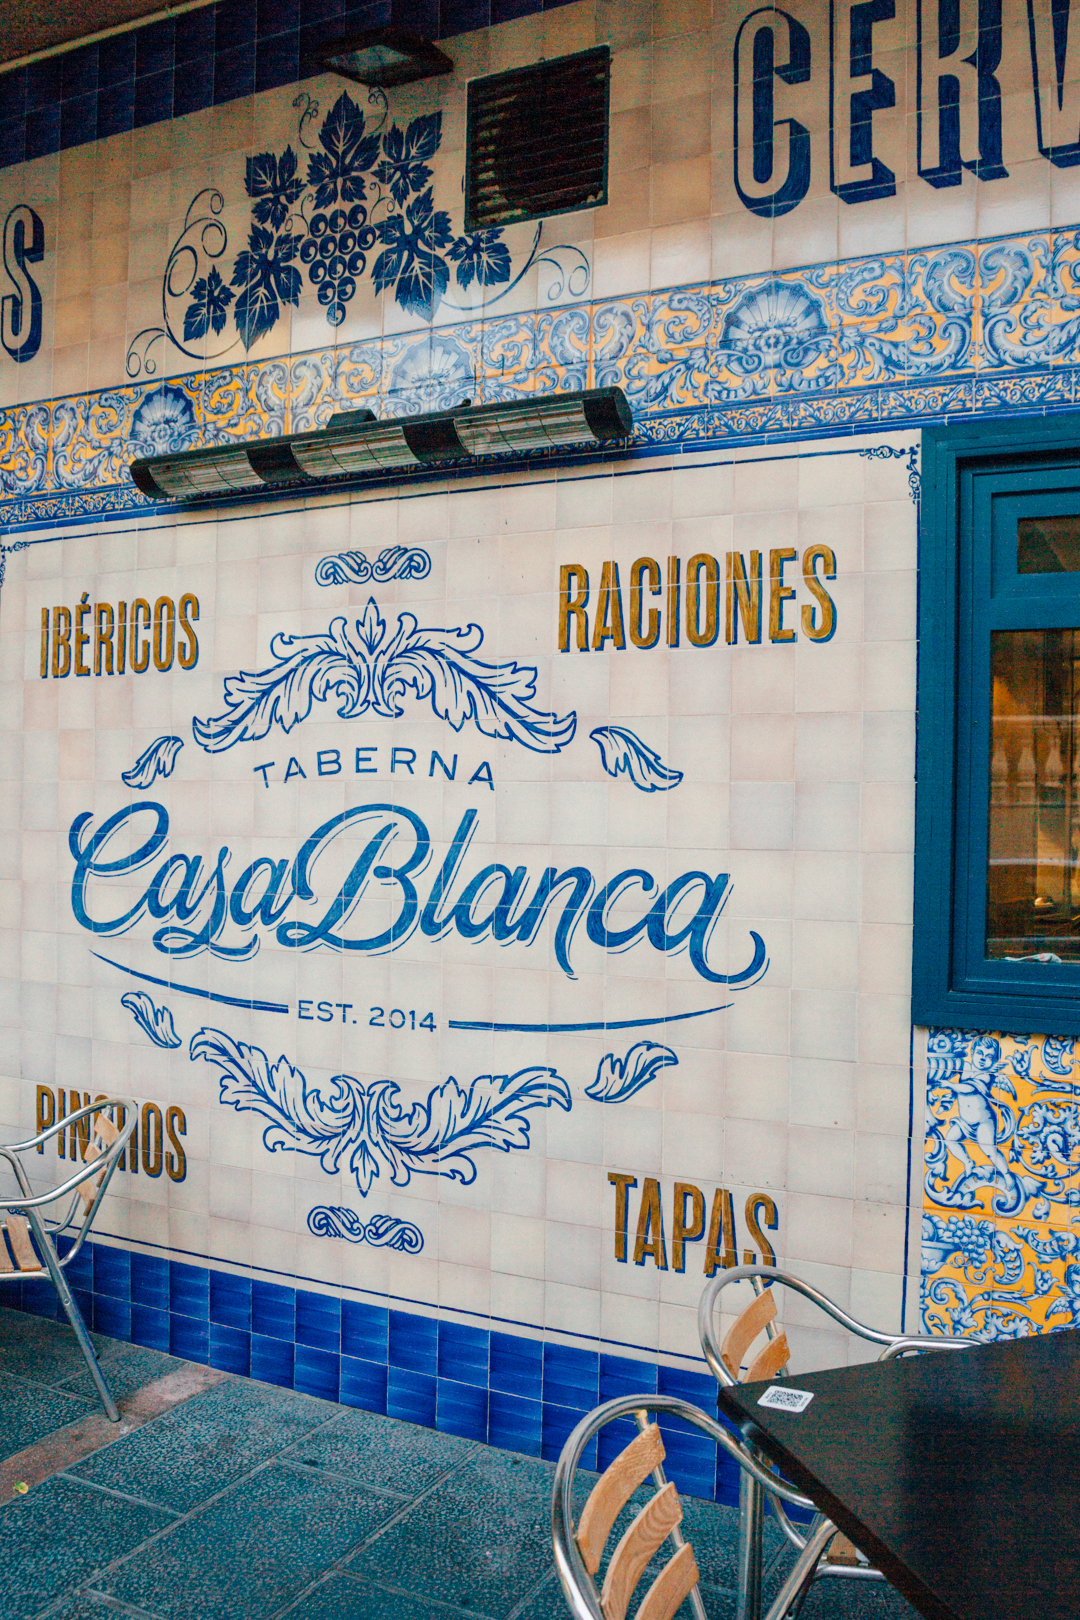 the outsdide tile decor of Taverna Casa Blanca in Marbella, Spain